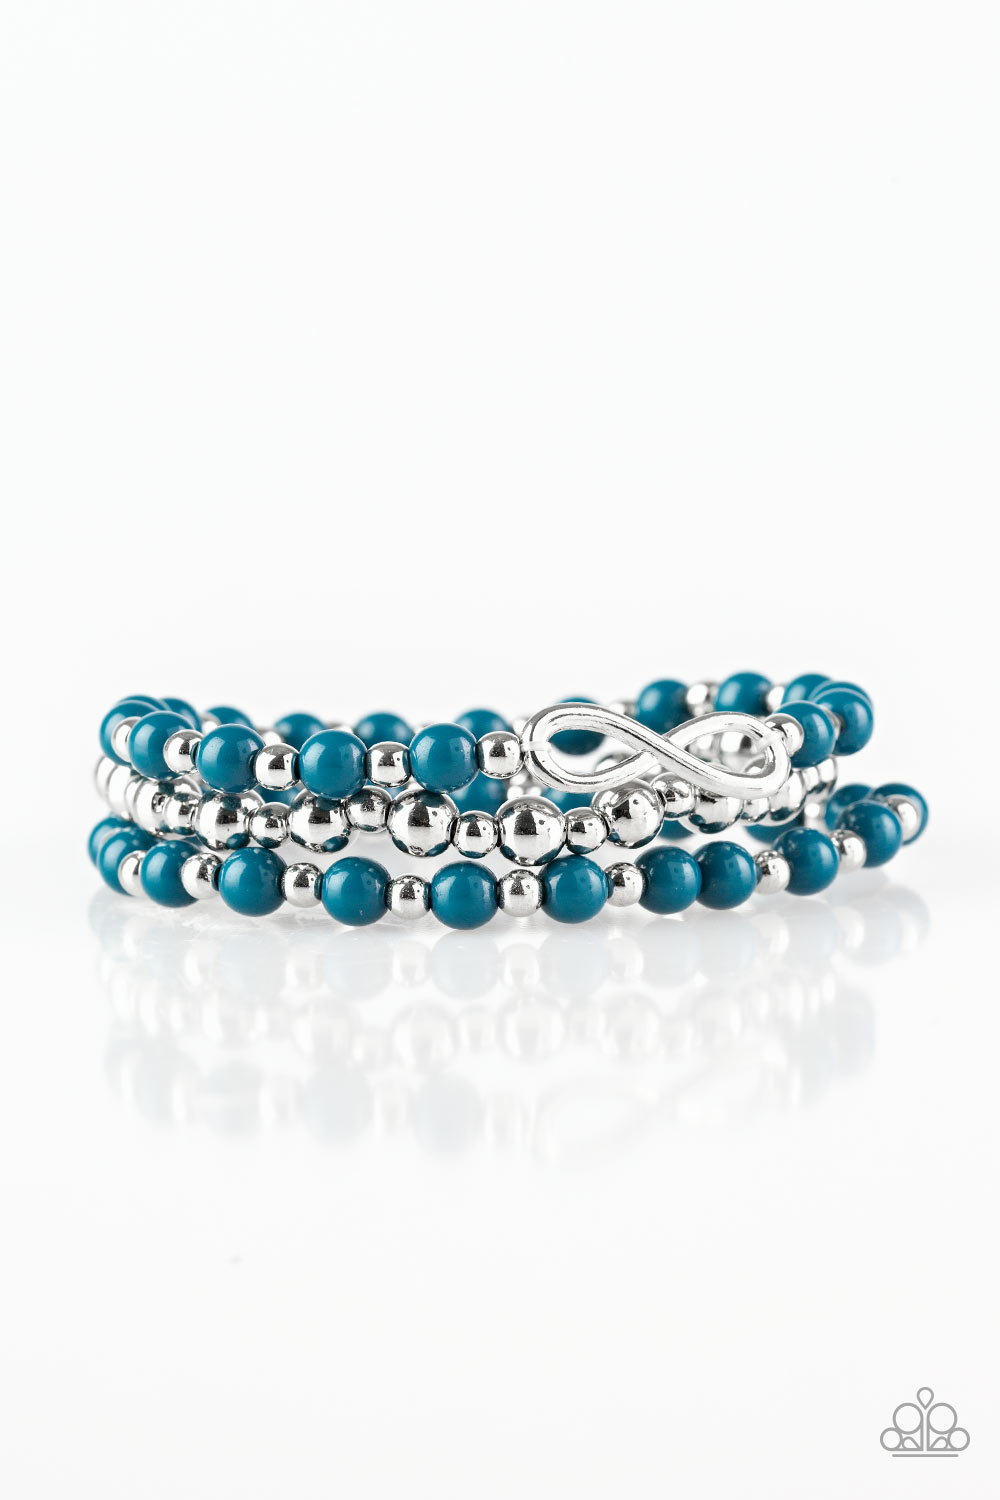 Immeasurably Infinite - Blue Bracelet freeshipping - JewLz4u Gemstone Gallery